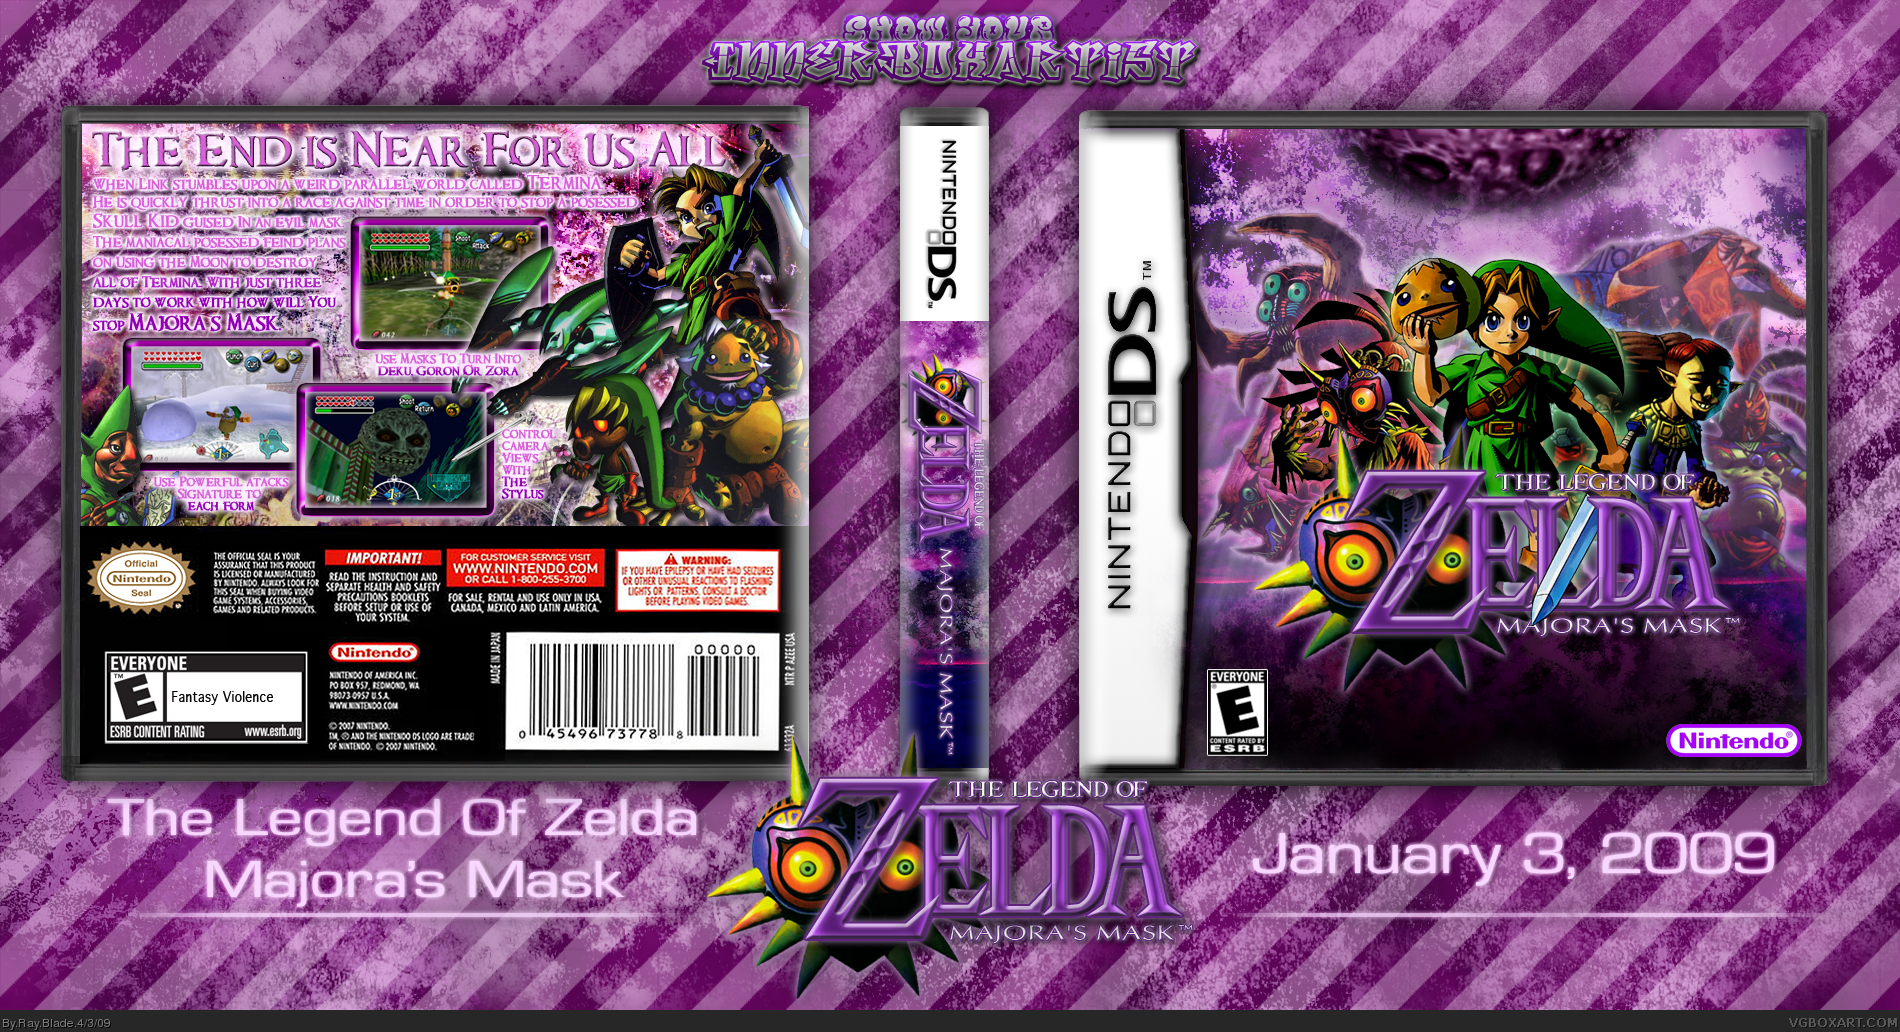 The Legend Of Zelda: Majora's Mask box cover